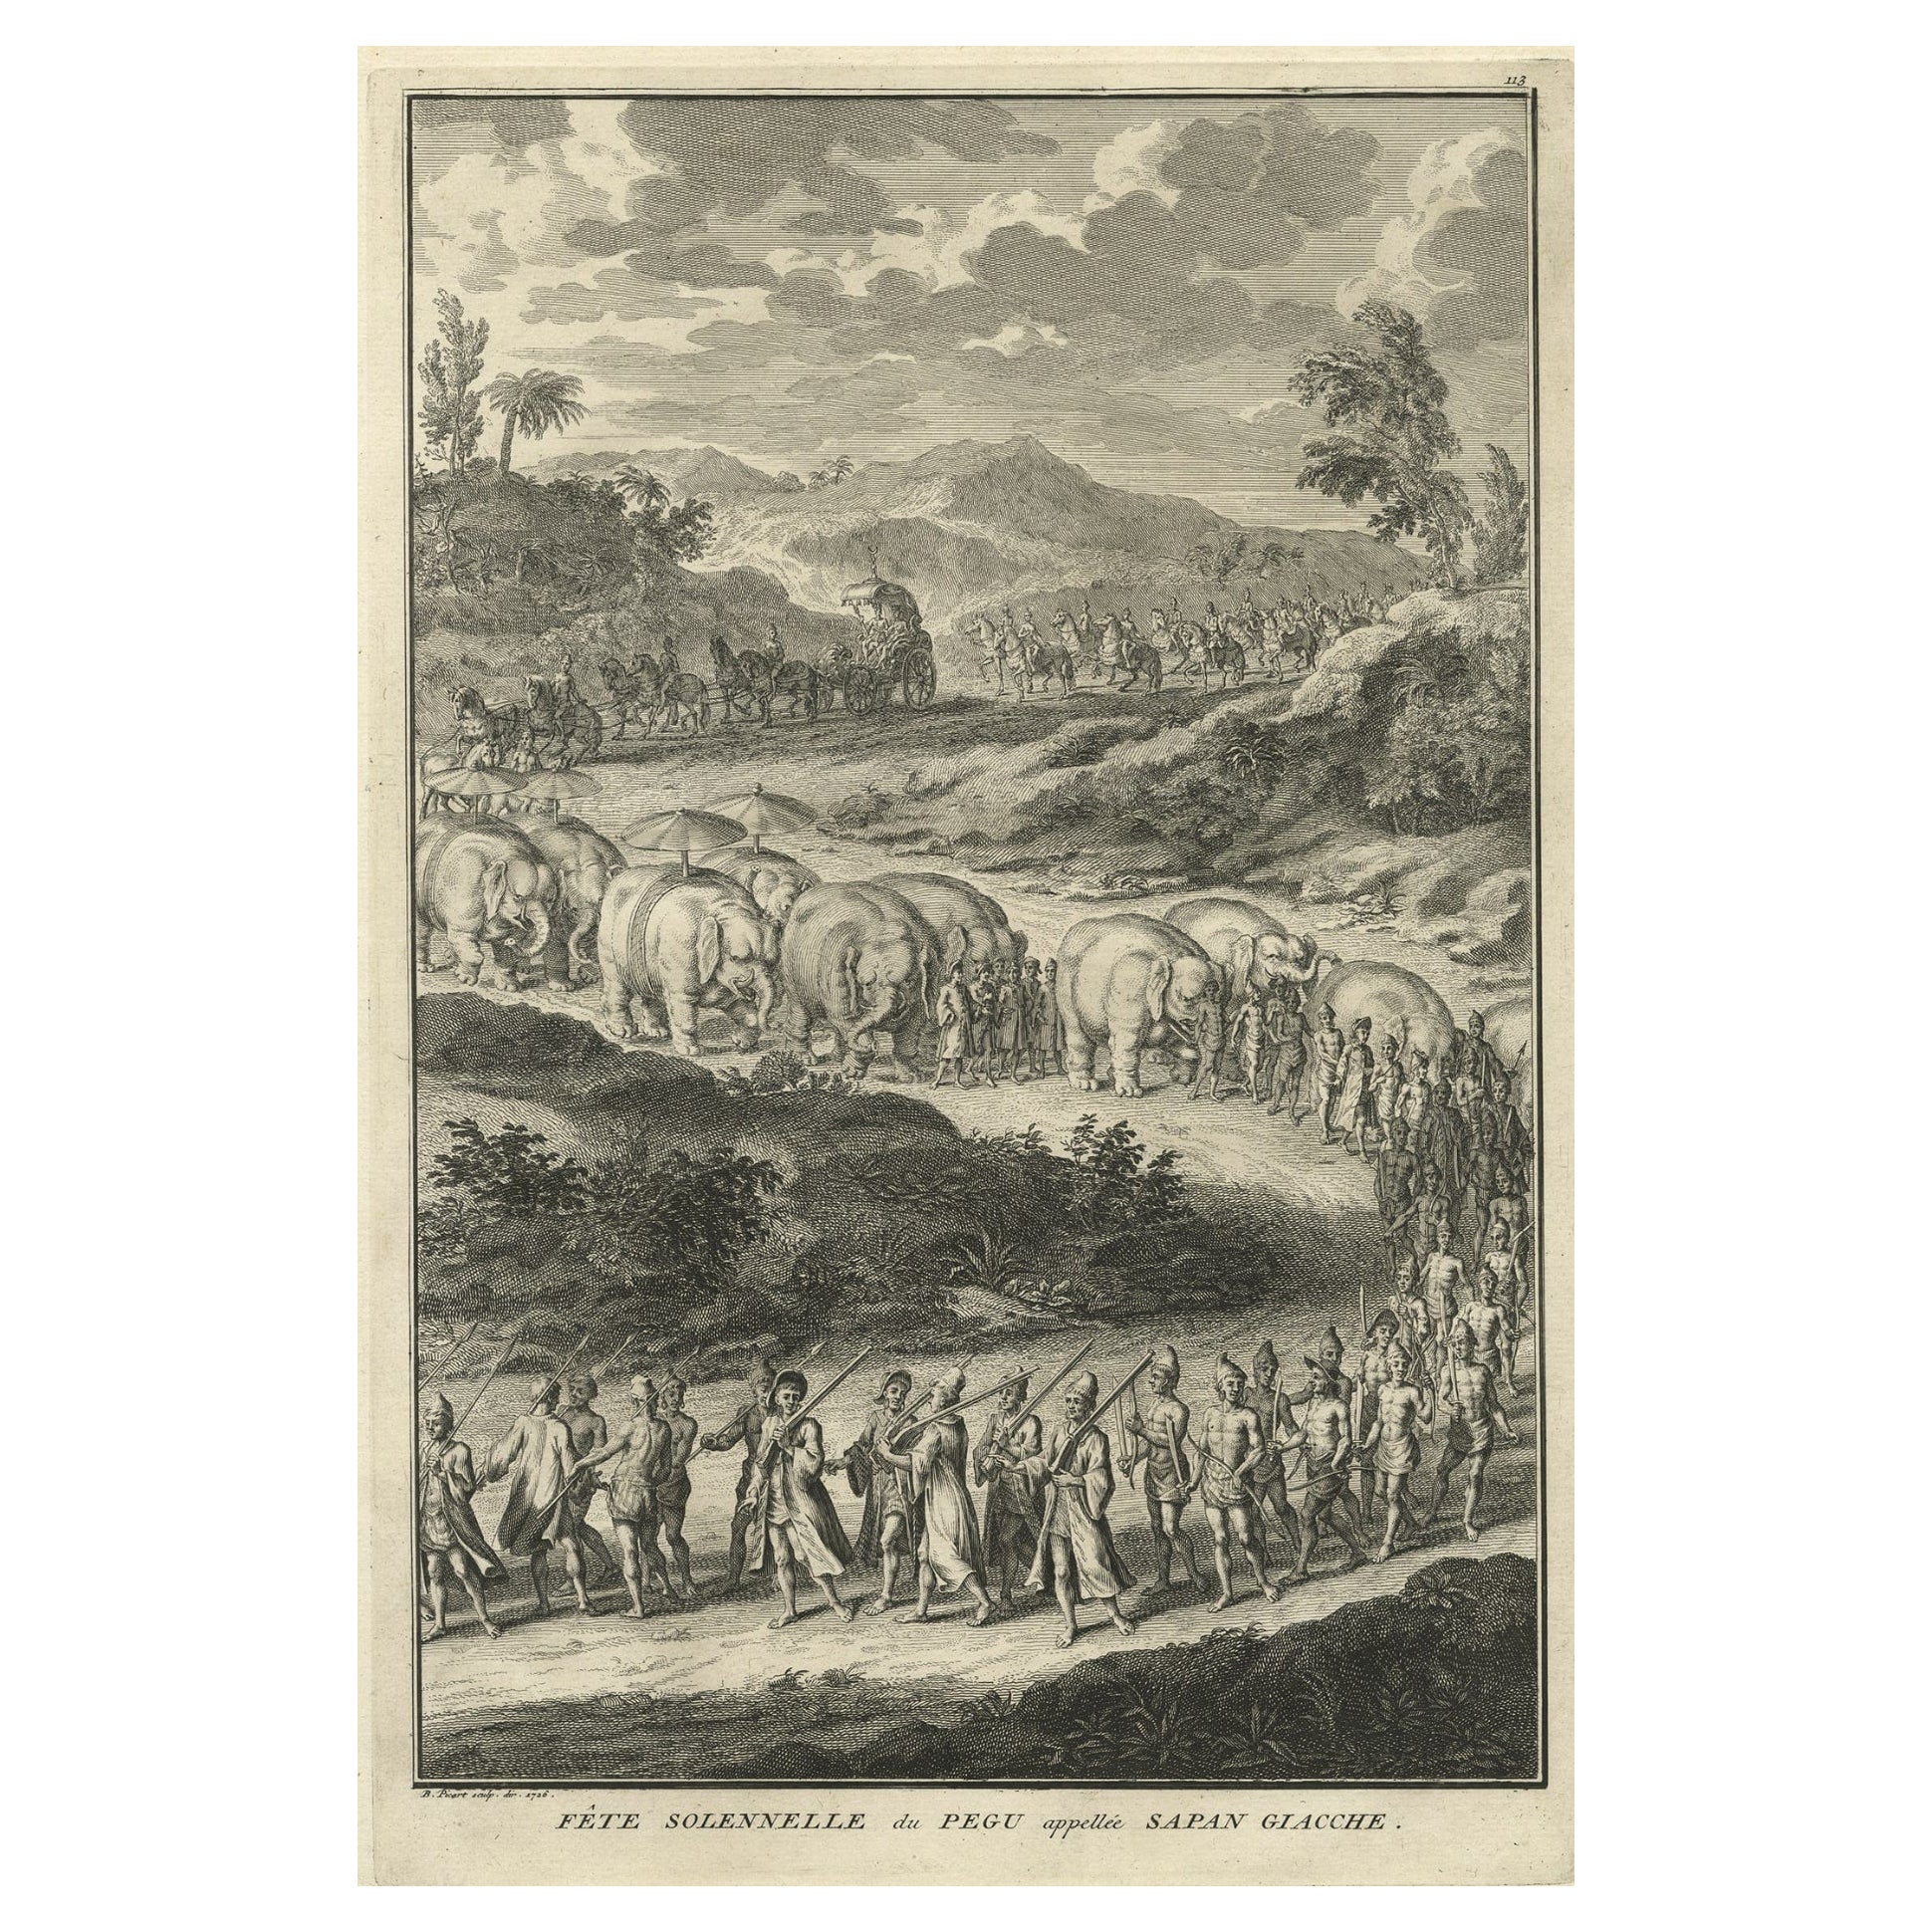 Print of the Solemn Celebration Sapan Giacche in Pegu, Burma 'Myanmar', 1725